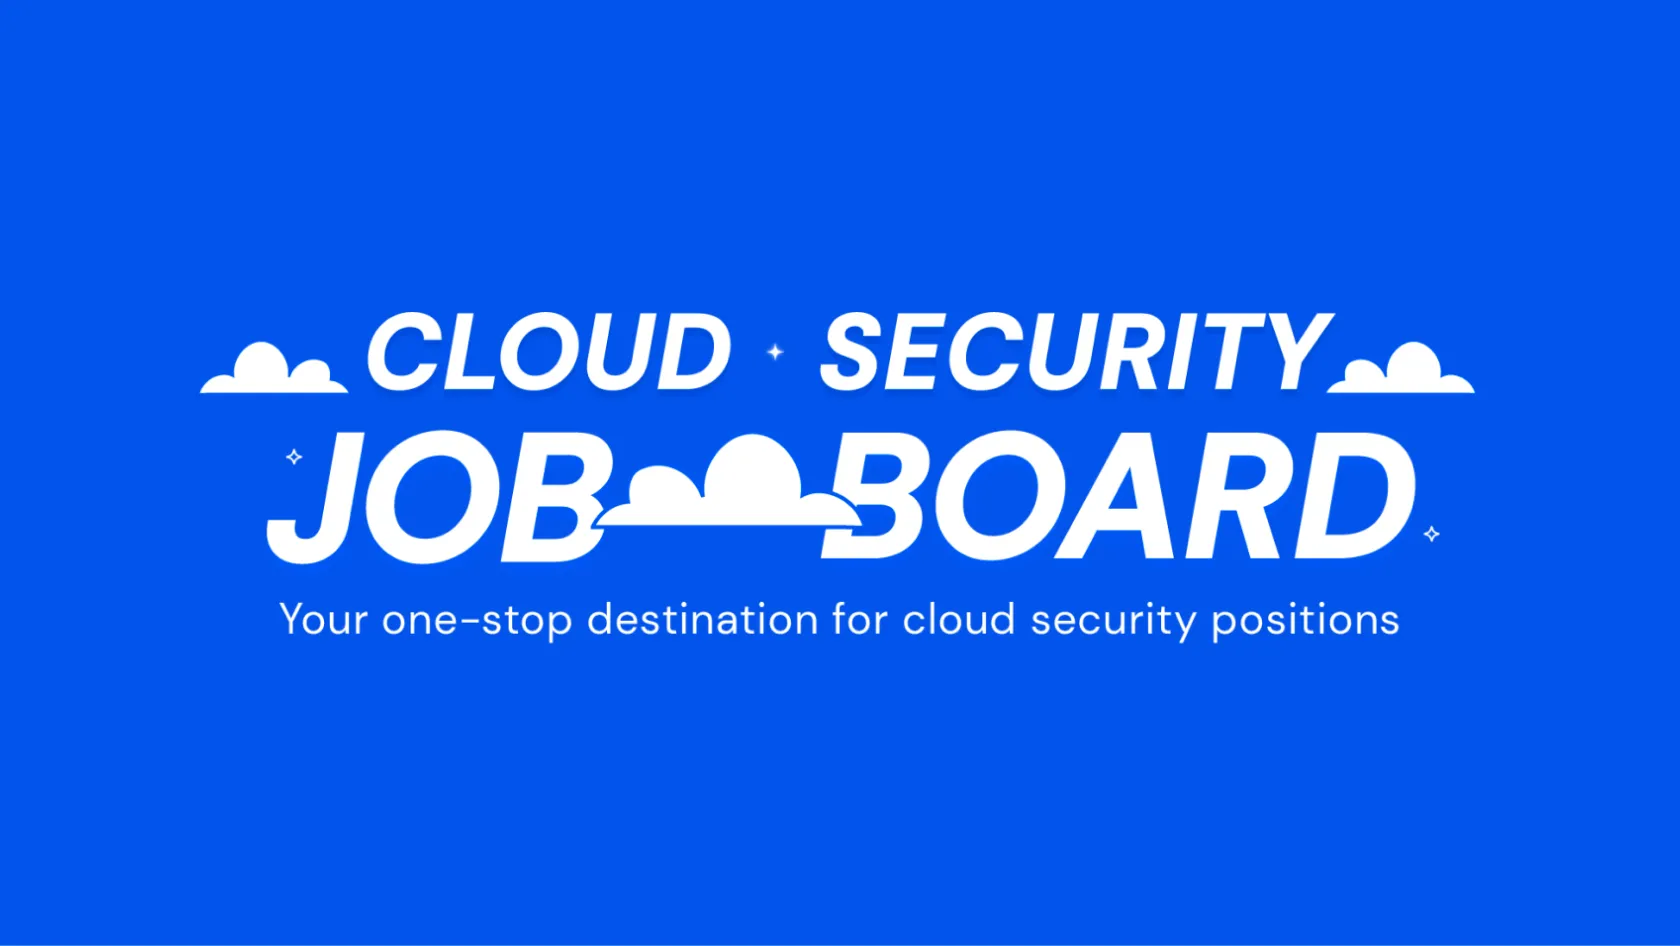 Cloud security job board